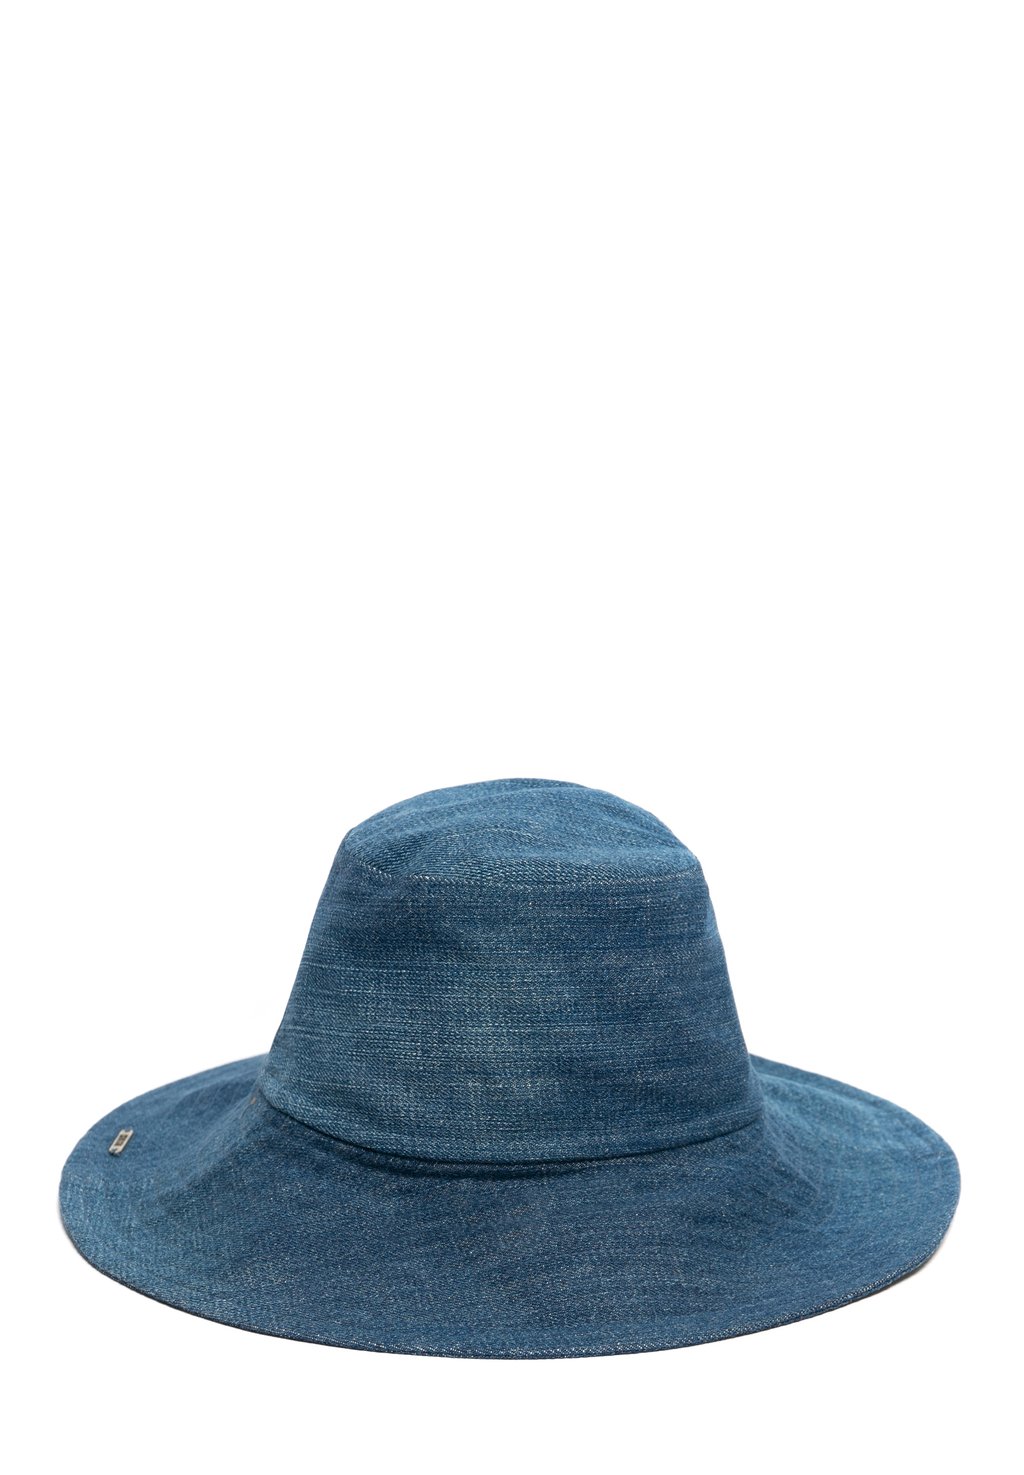 Шляпа CRAFTIA Big Star, темно-синий